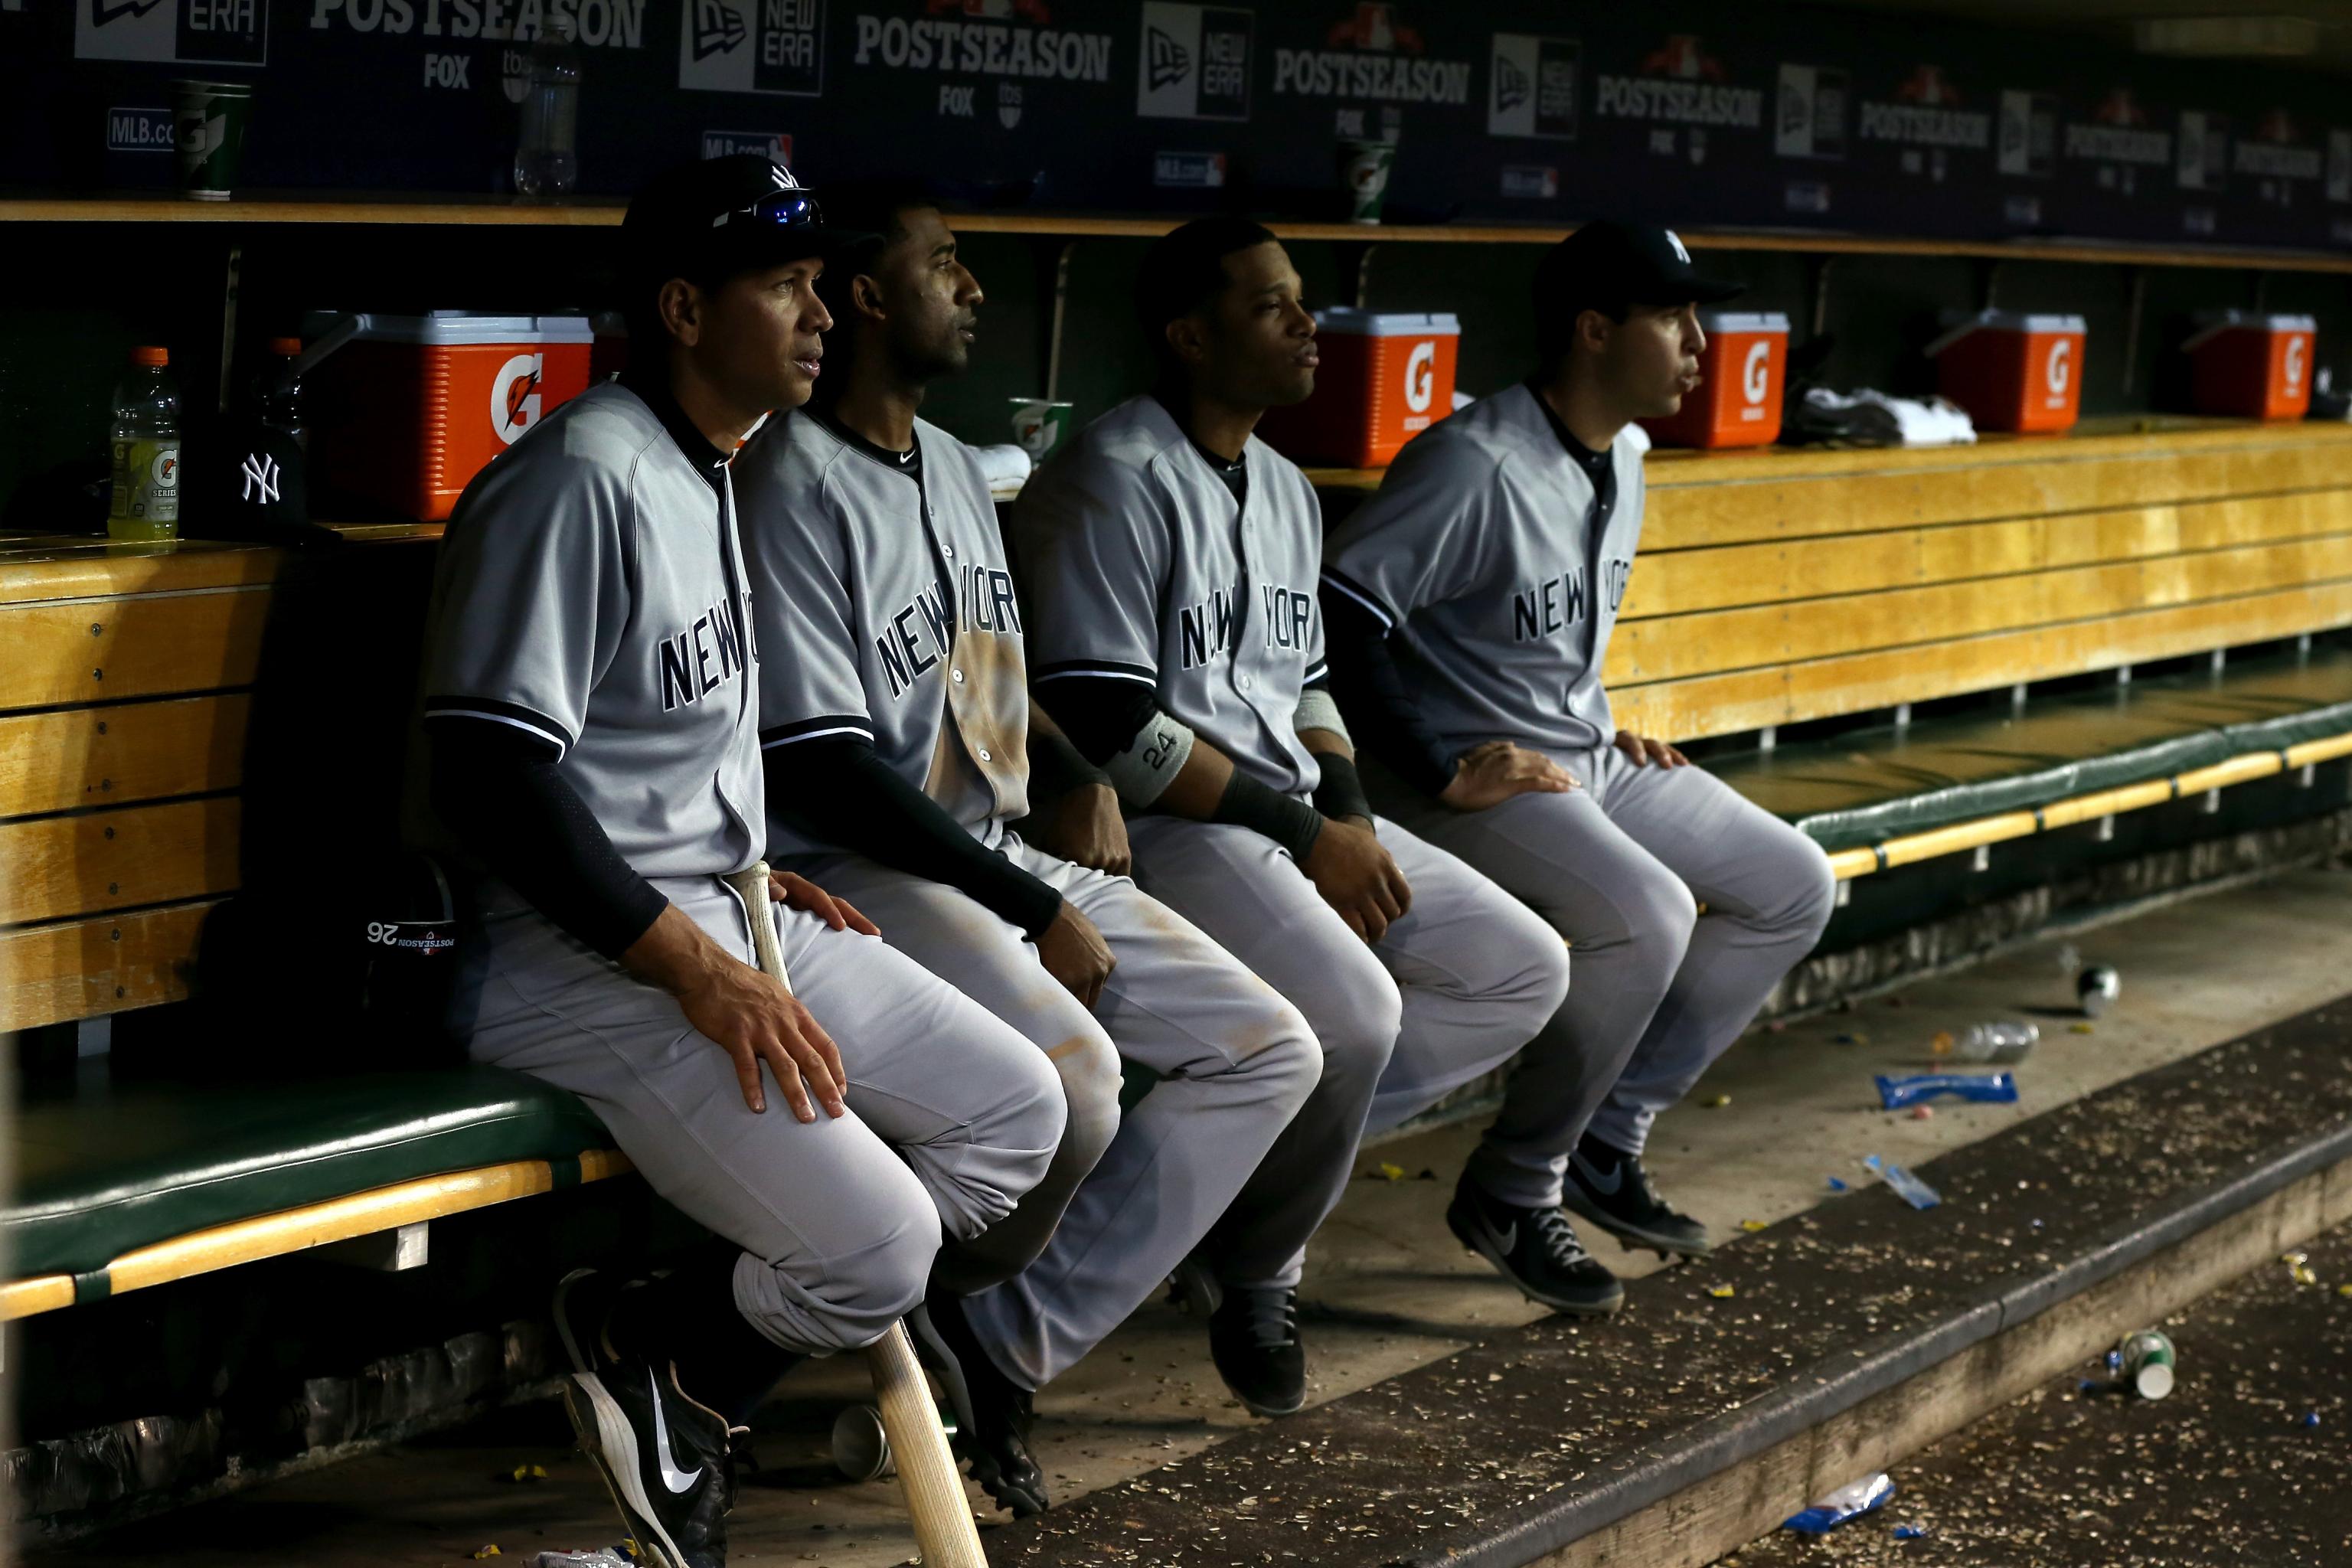 Tino Martinez 10 Greatest Yankee Home Run Moments 